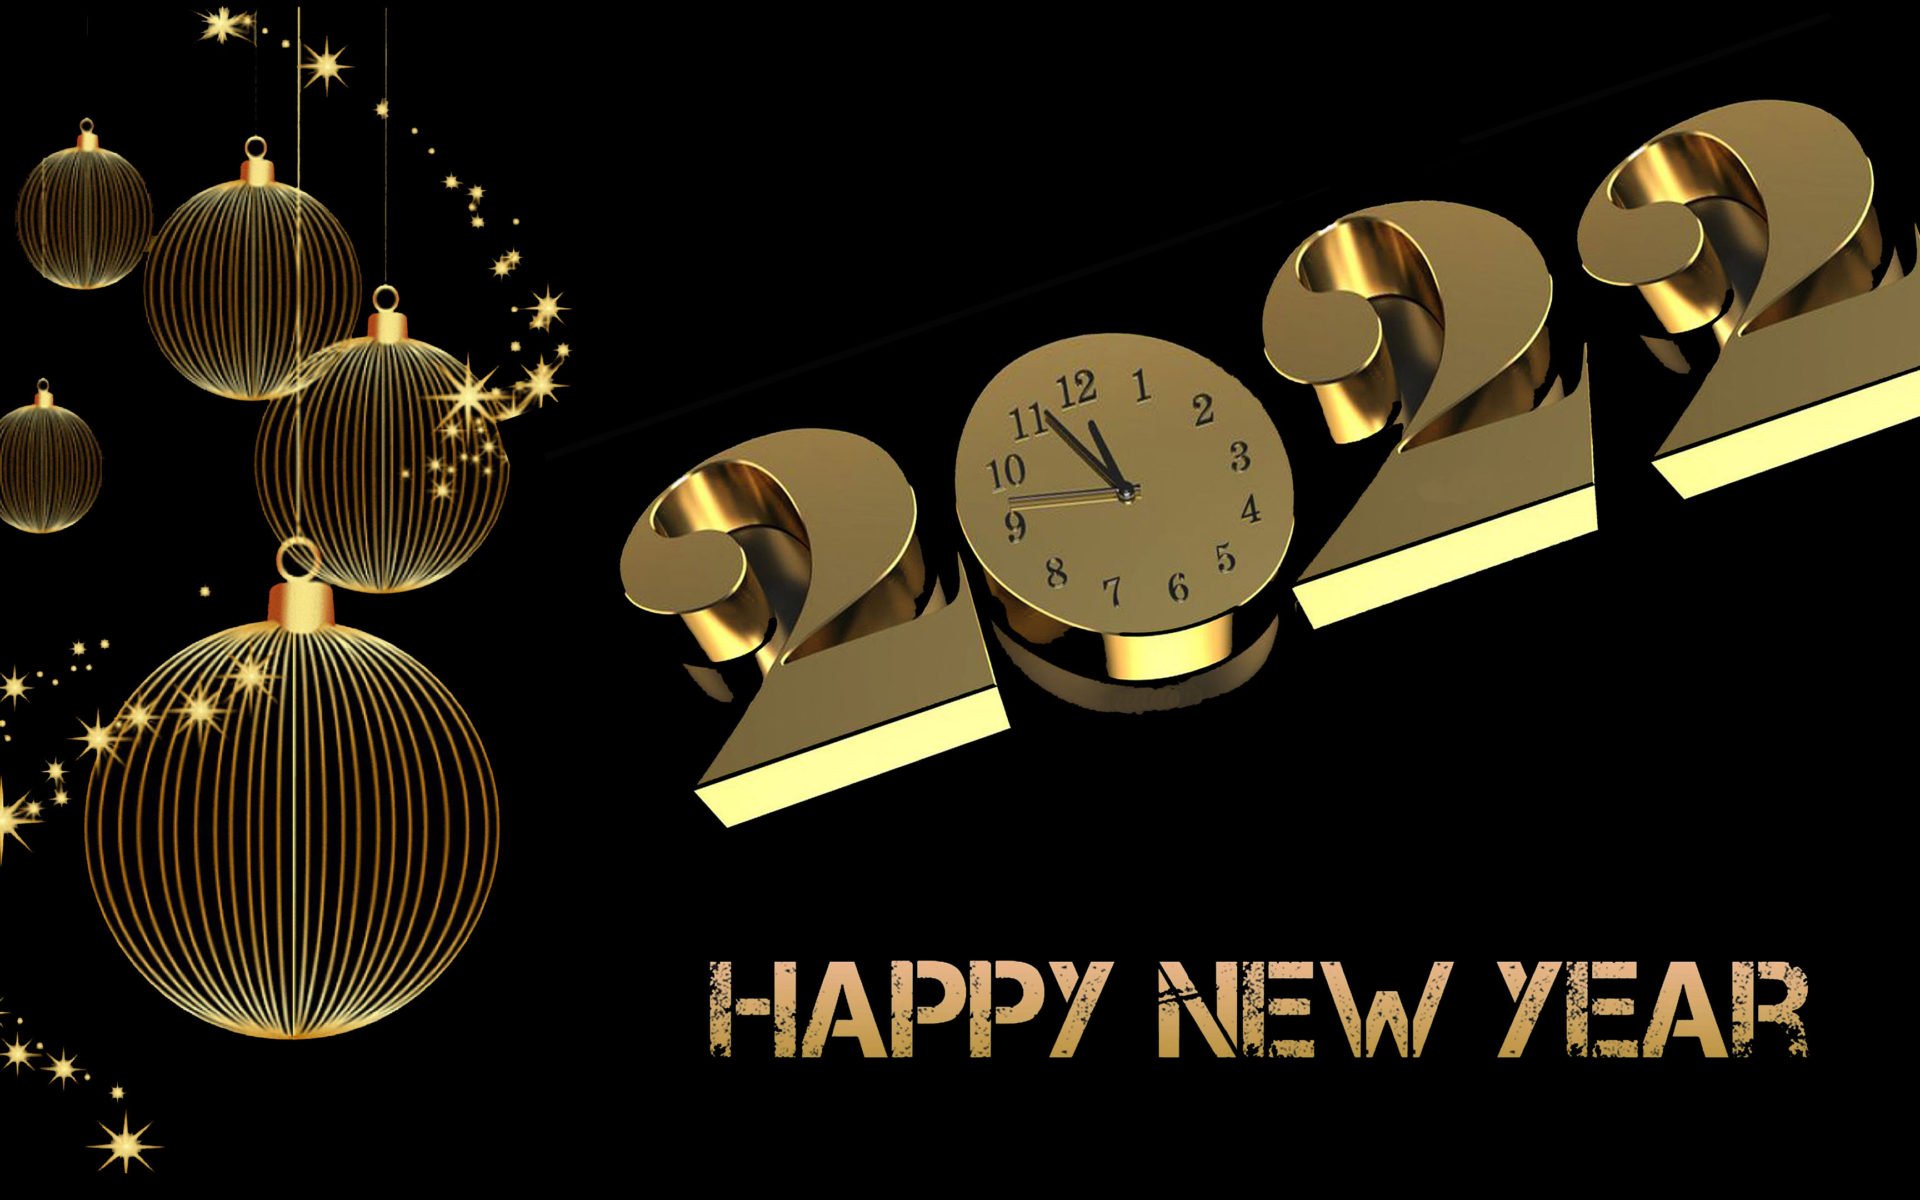 Happy New Year 2022 Gold 3D Desktop Desktop Wallpaper For Pc Tablet And Mobile 3840x2160, Wallpaper13.com